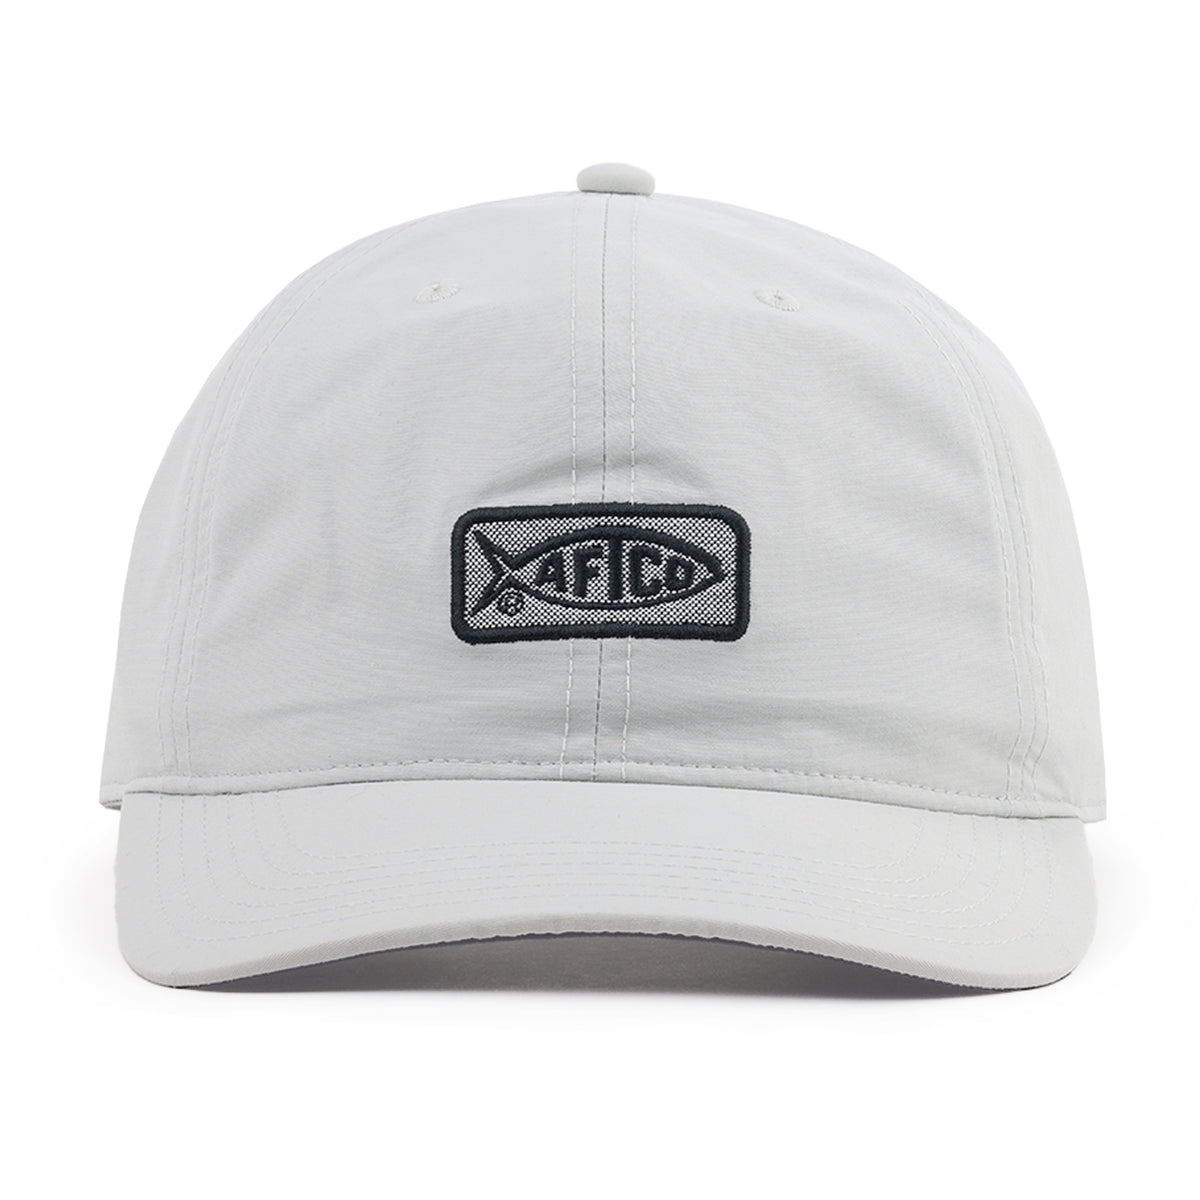 AFTCO Original Fishing Hat